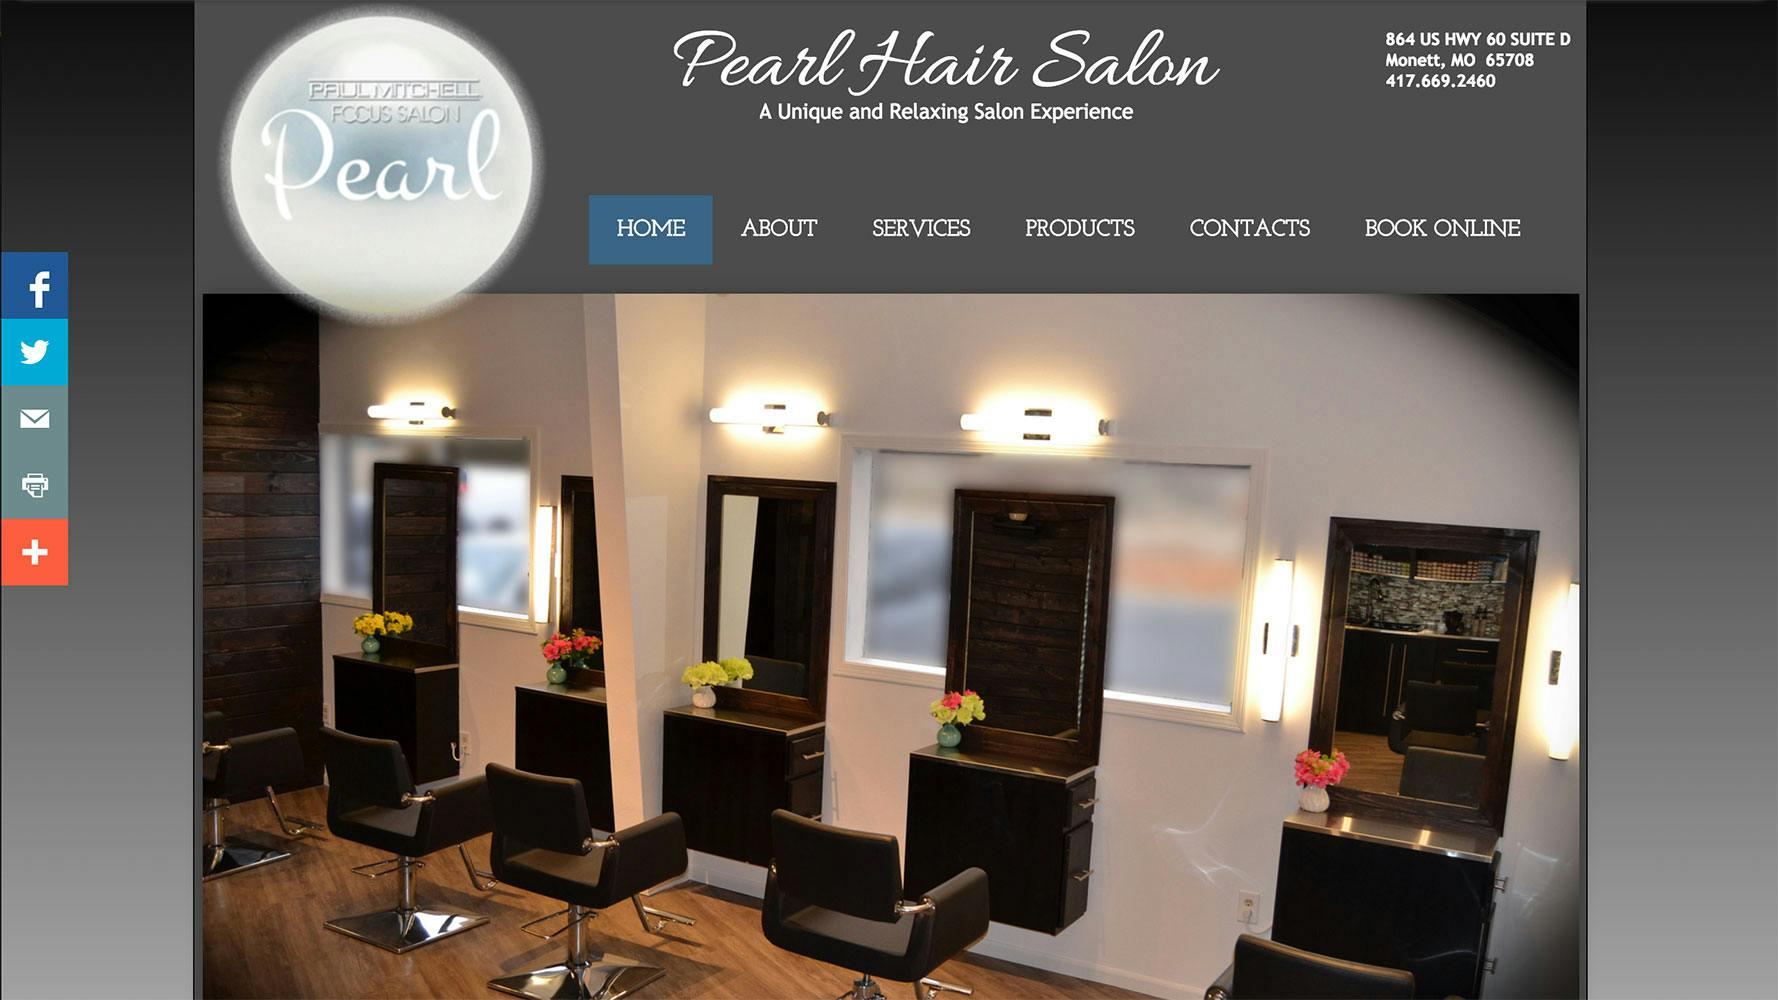 Pearl Hair Salon's old website.